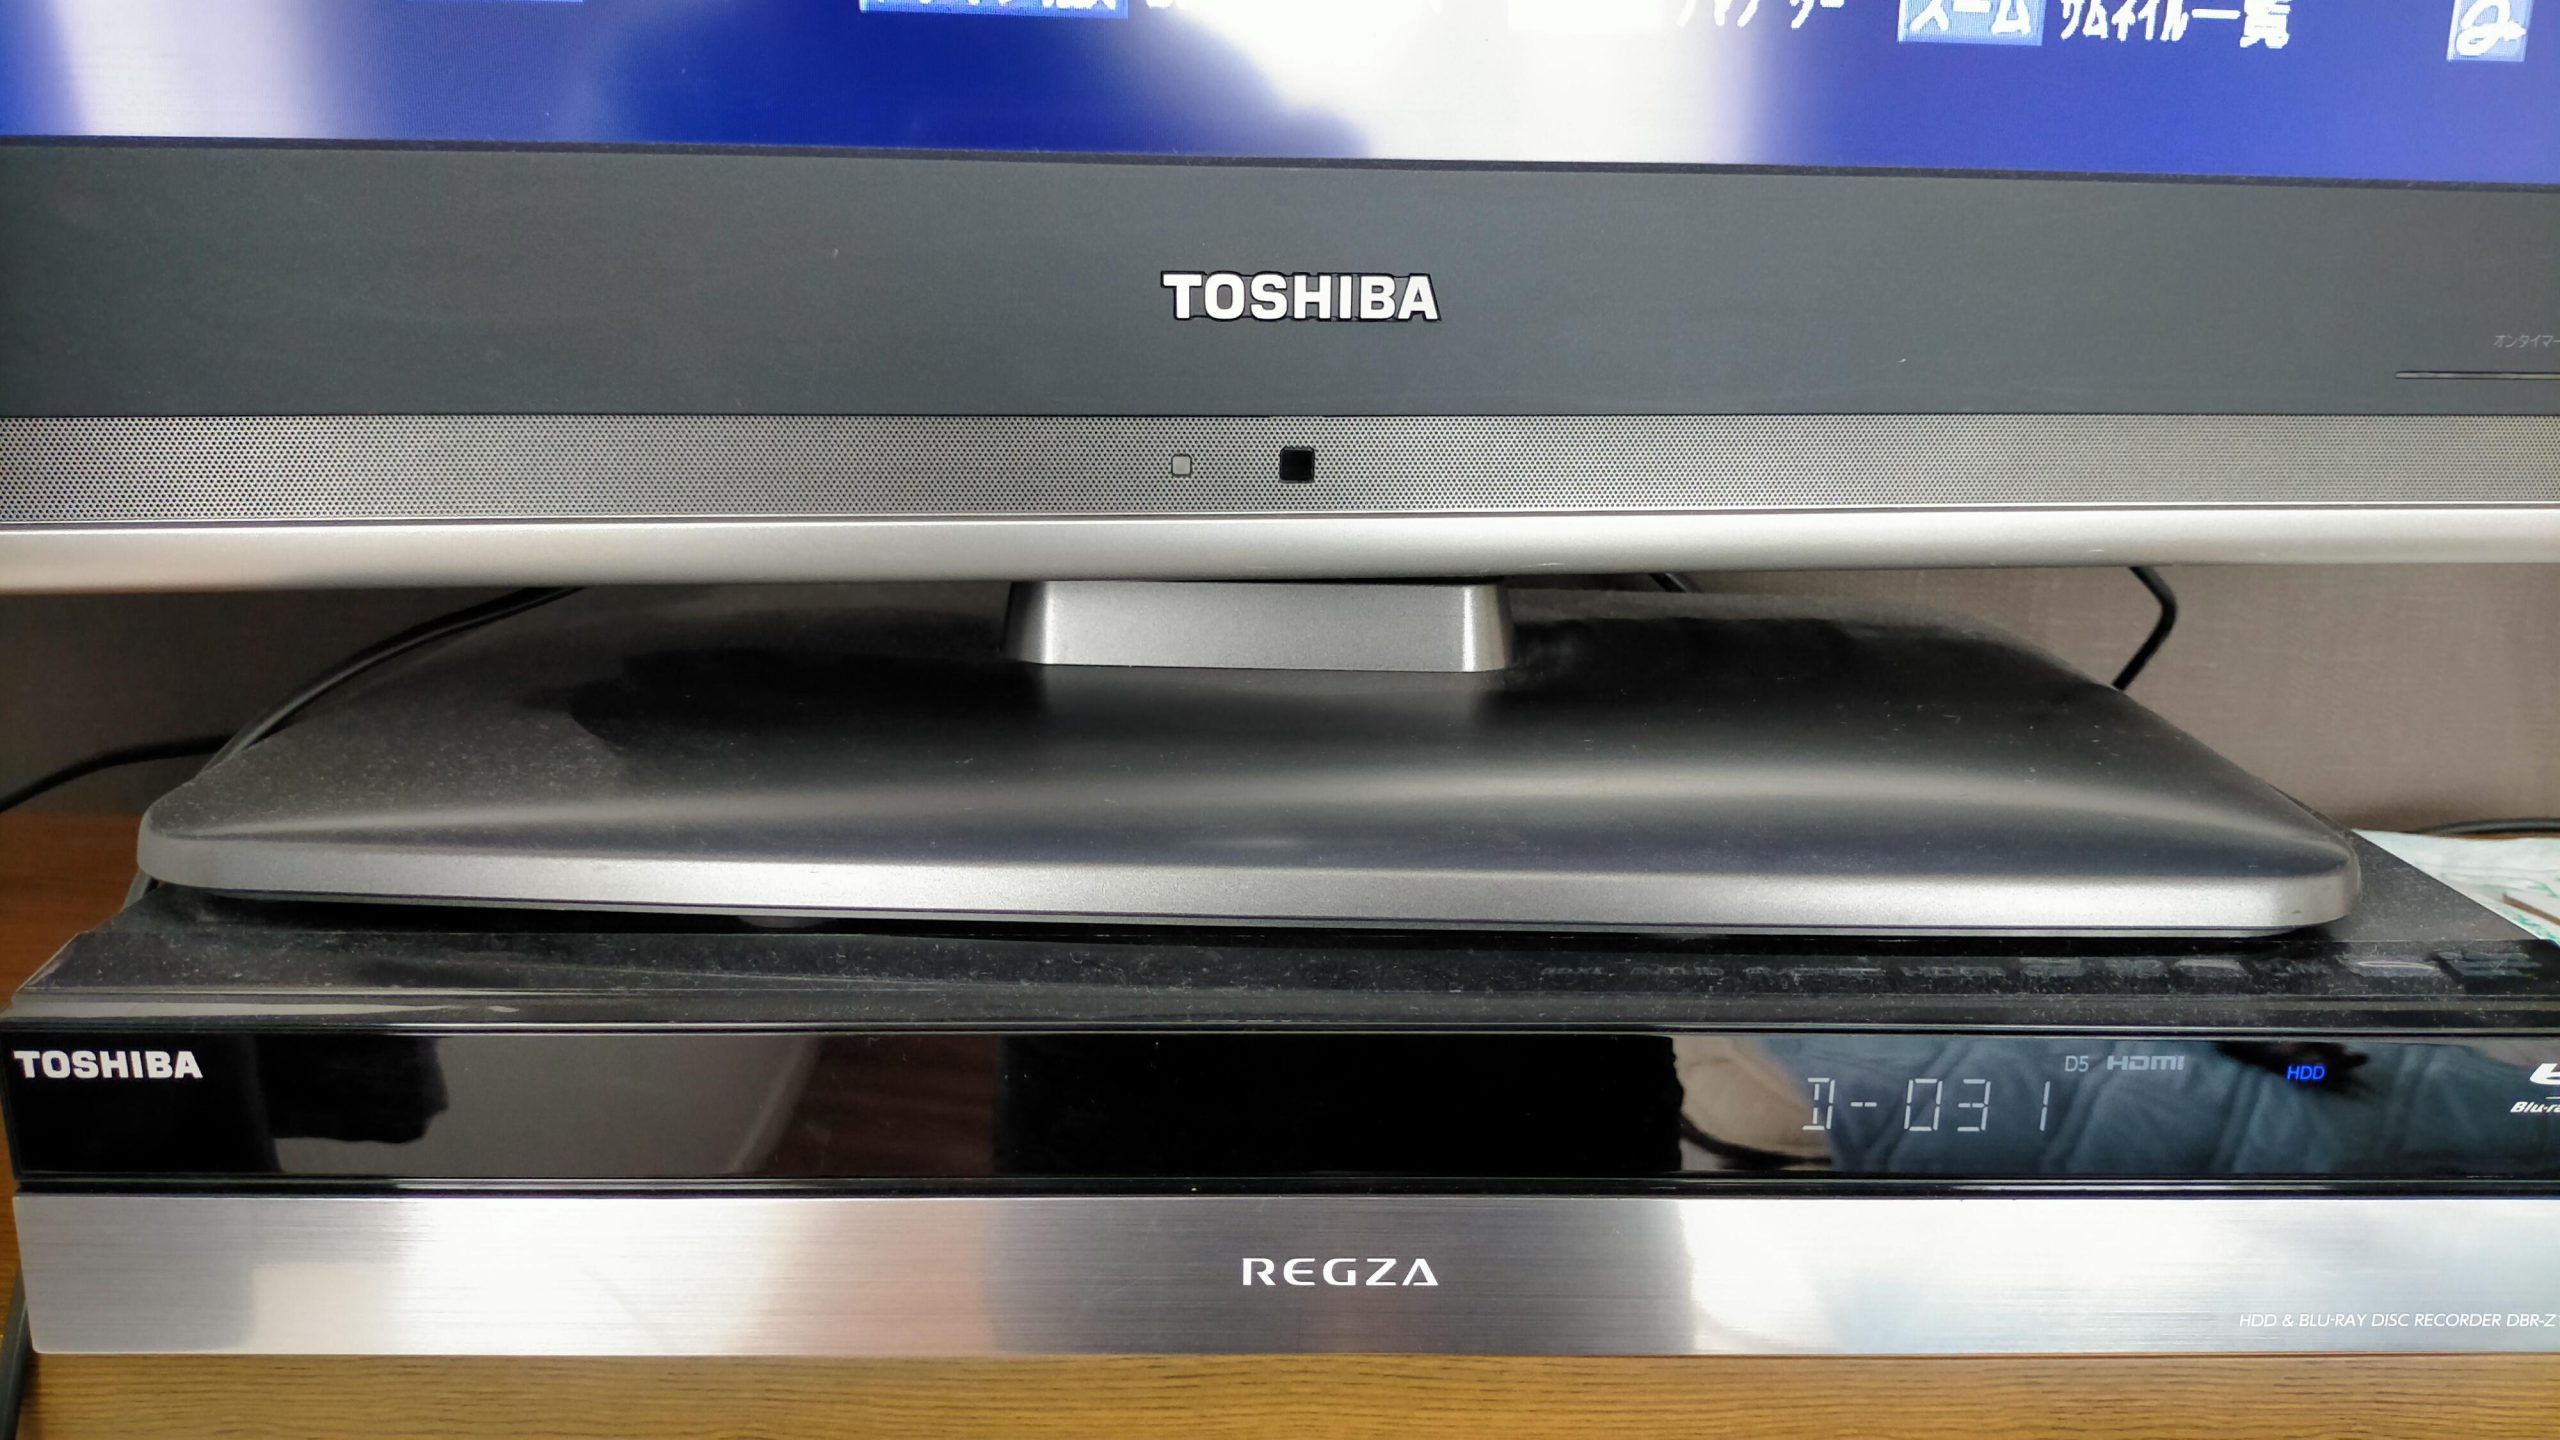 TOSHIBA REGZAのブルーレイ、DBR-Z150は、使いやすくて満足度大